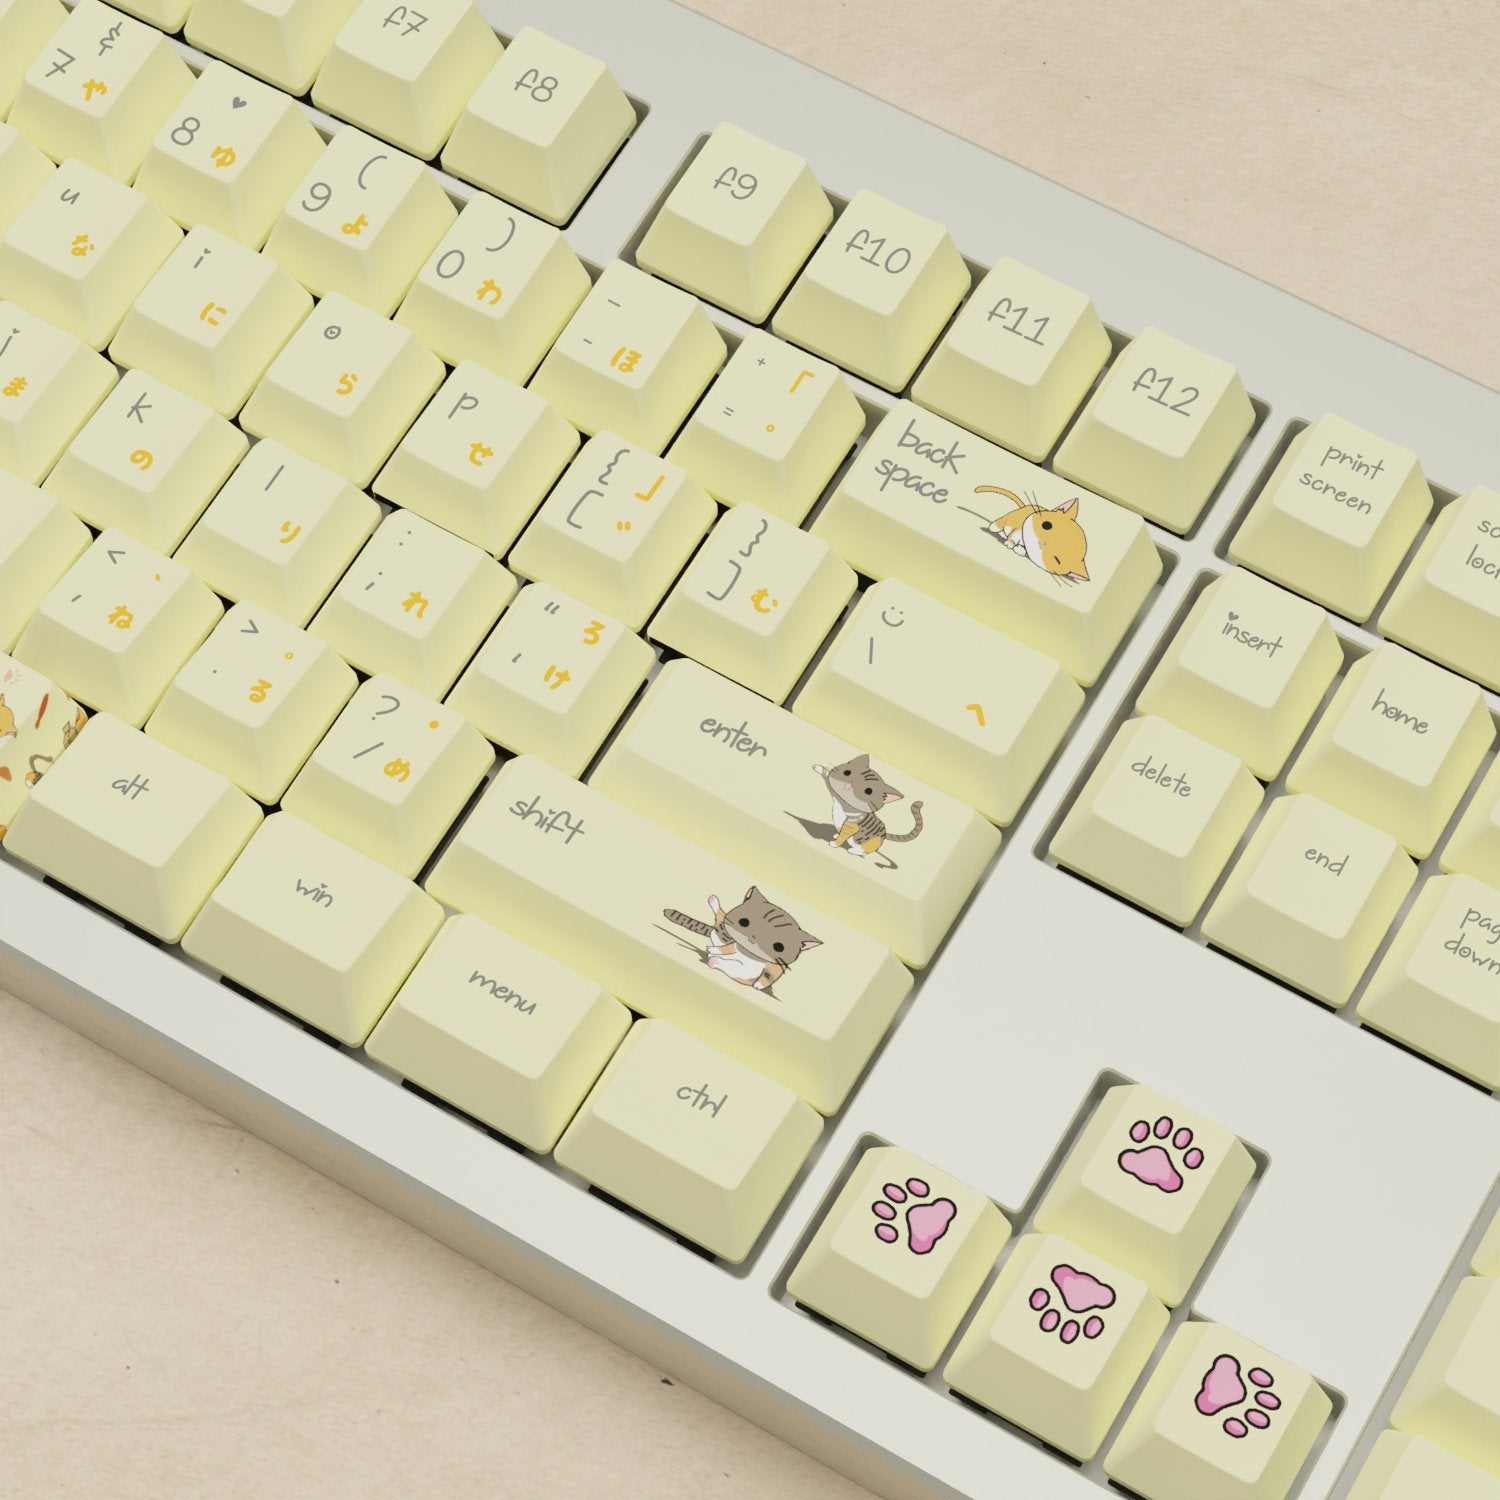 Monsgeek M5 - 100% Meowcaps Mechanical Keyboard - Goblintechkeys